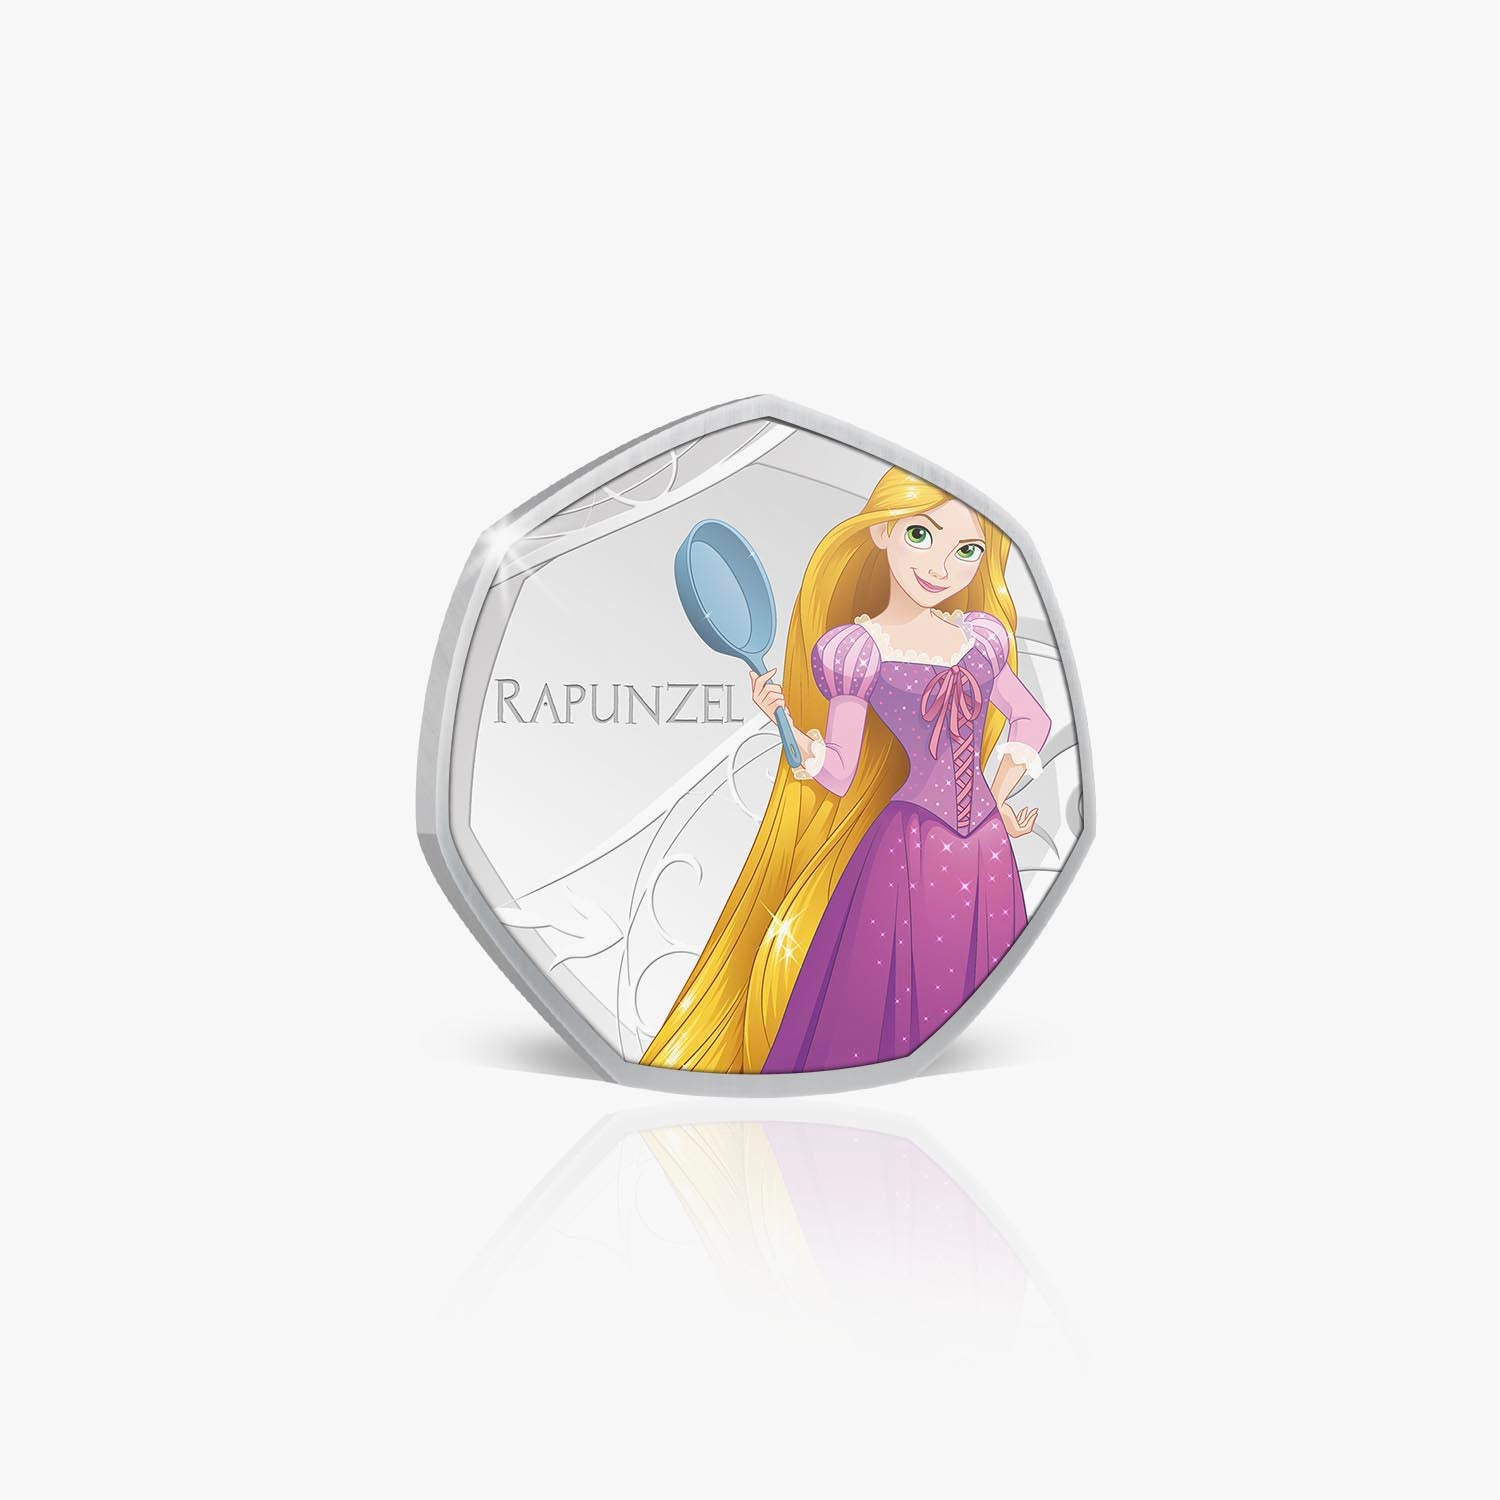 Rapunzel Silver-Plated Commemorative